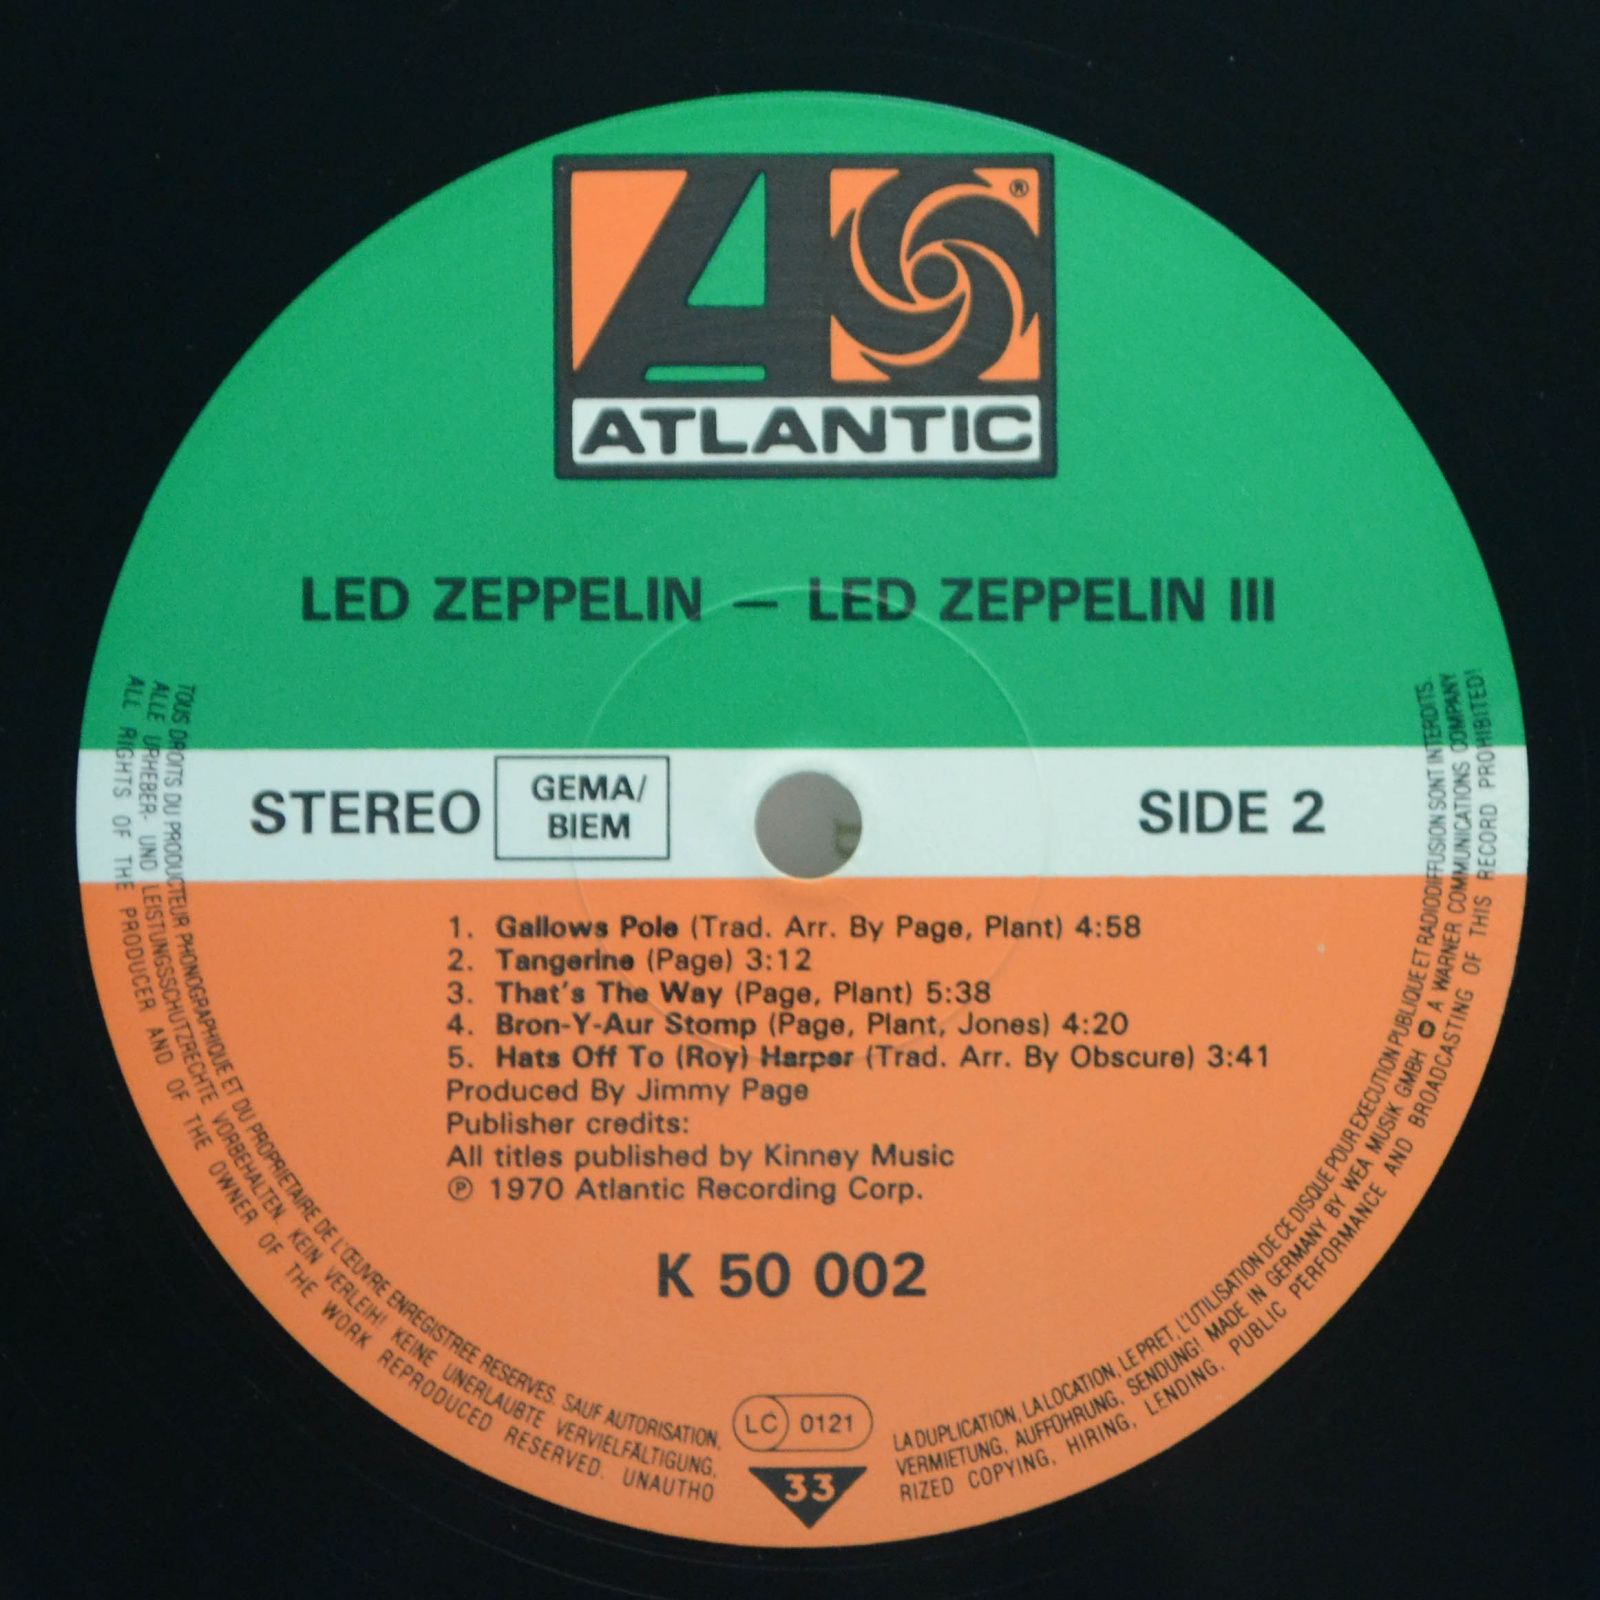 Led Zeppelin — Led Zeppelin III, 1970